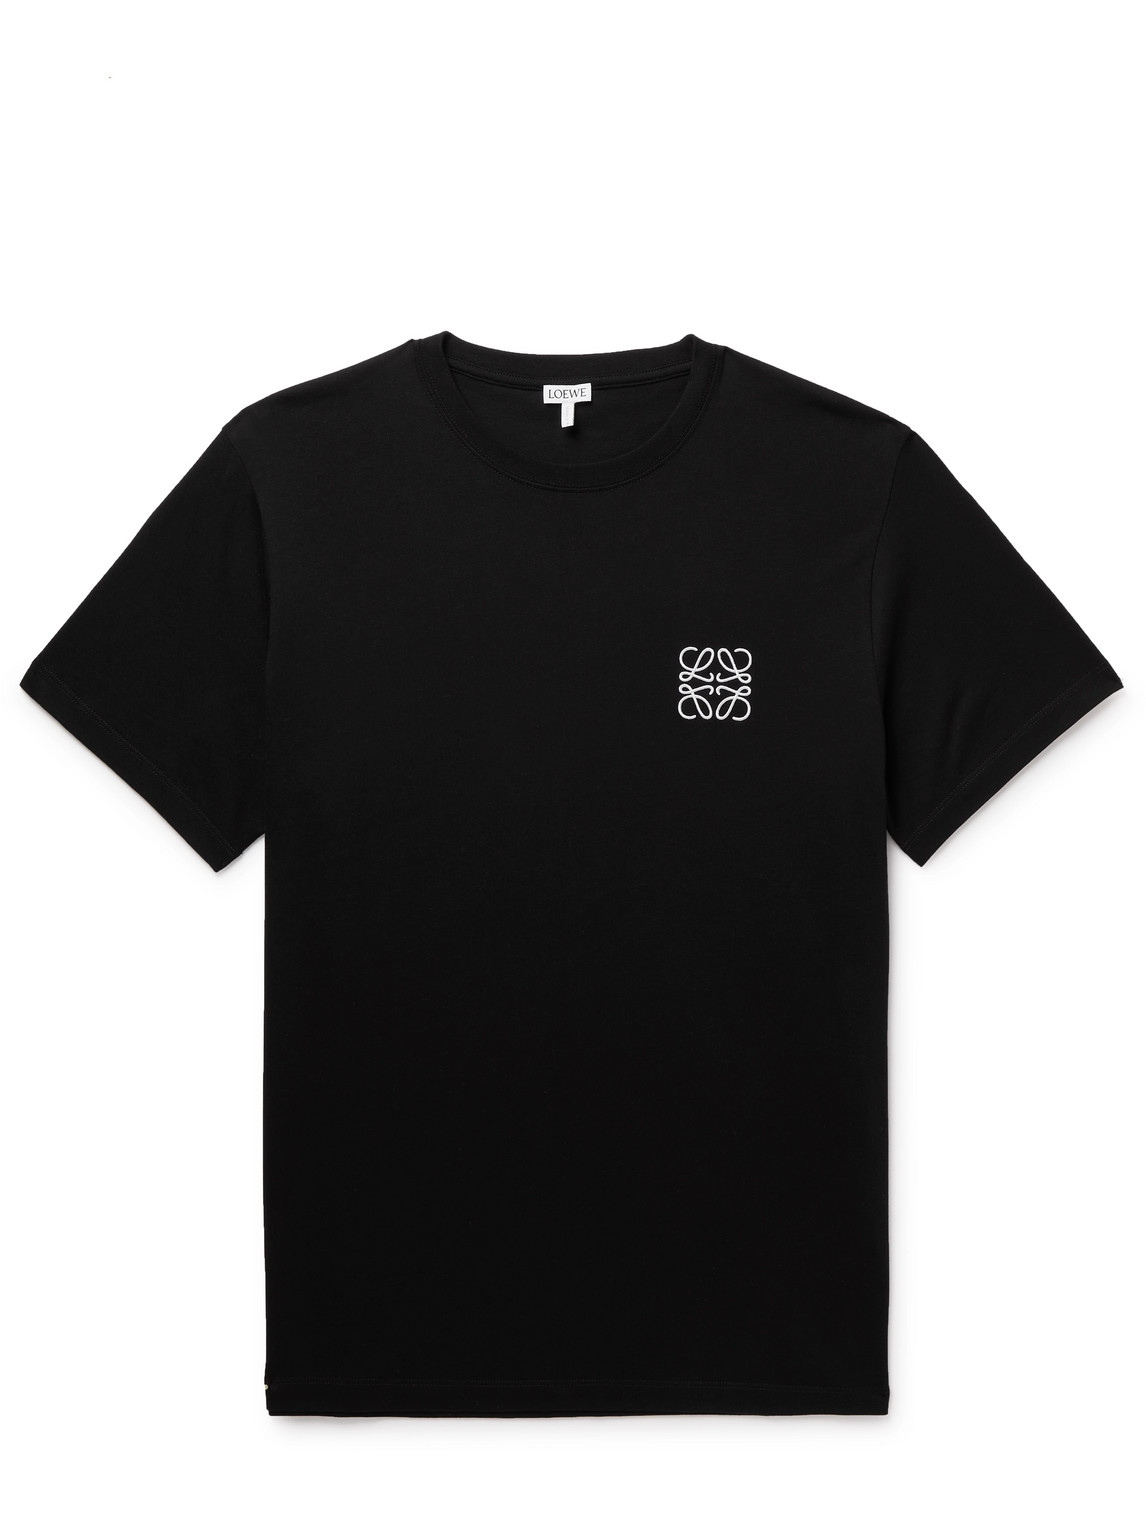 LOEWE - Logo-Embroidered Cotton-Jersey T-Shirt - Men - Black - S von LOEWE